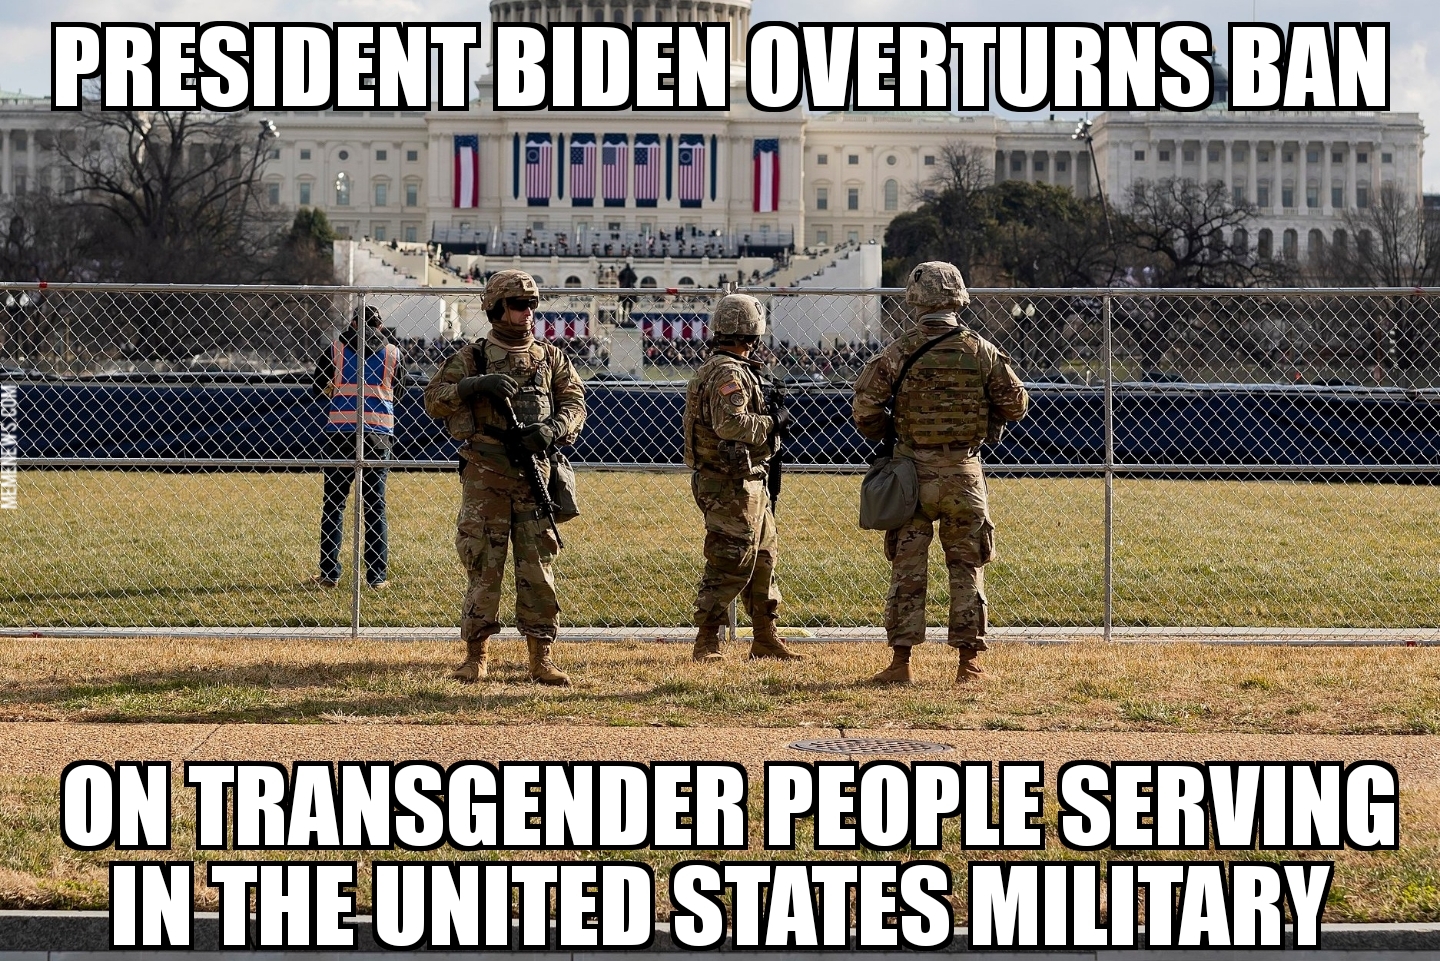 Biden overturns military transgender ban